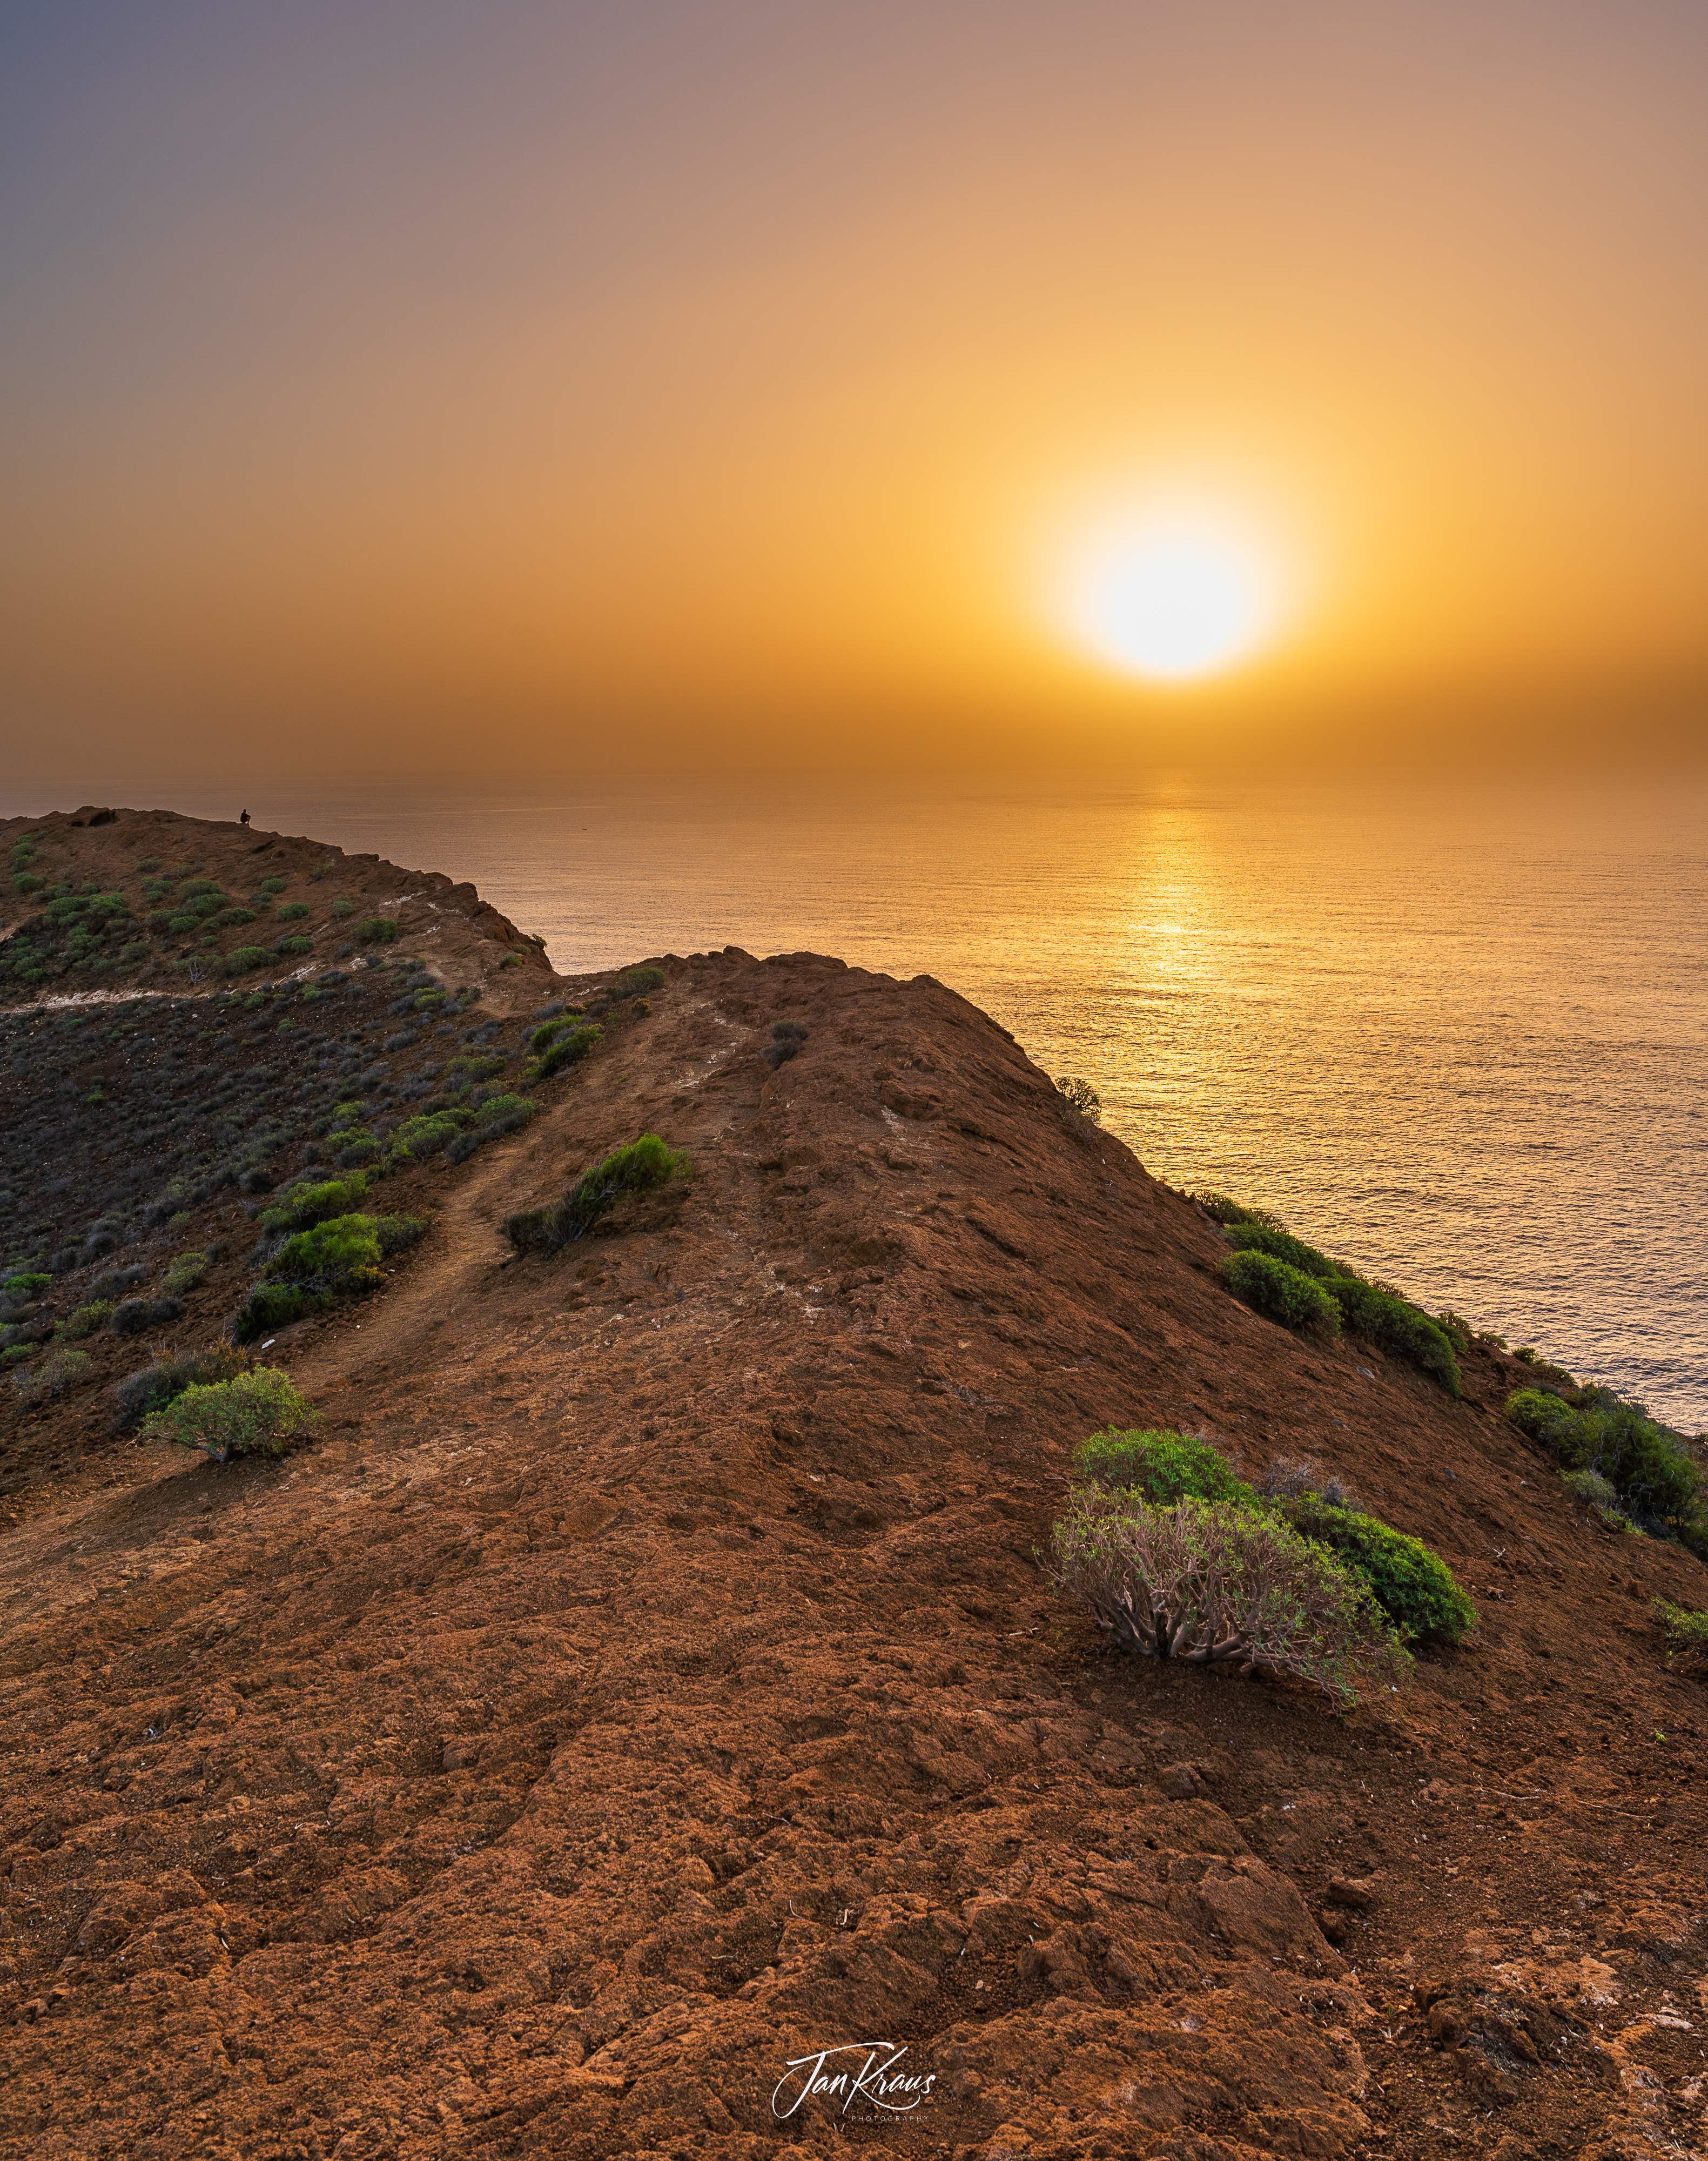 Stunning colours of the sunrise, captured at Montaña Amarilla, Tenerife, Canary Islands, Spain.